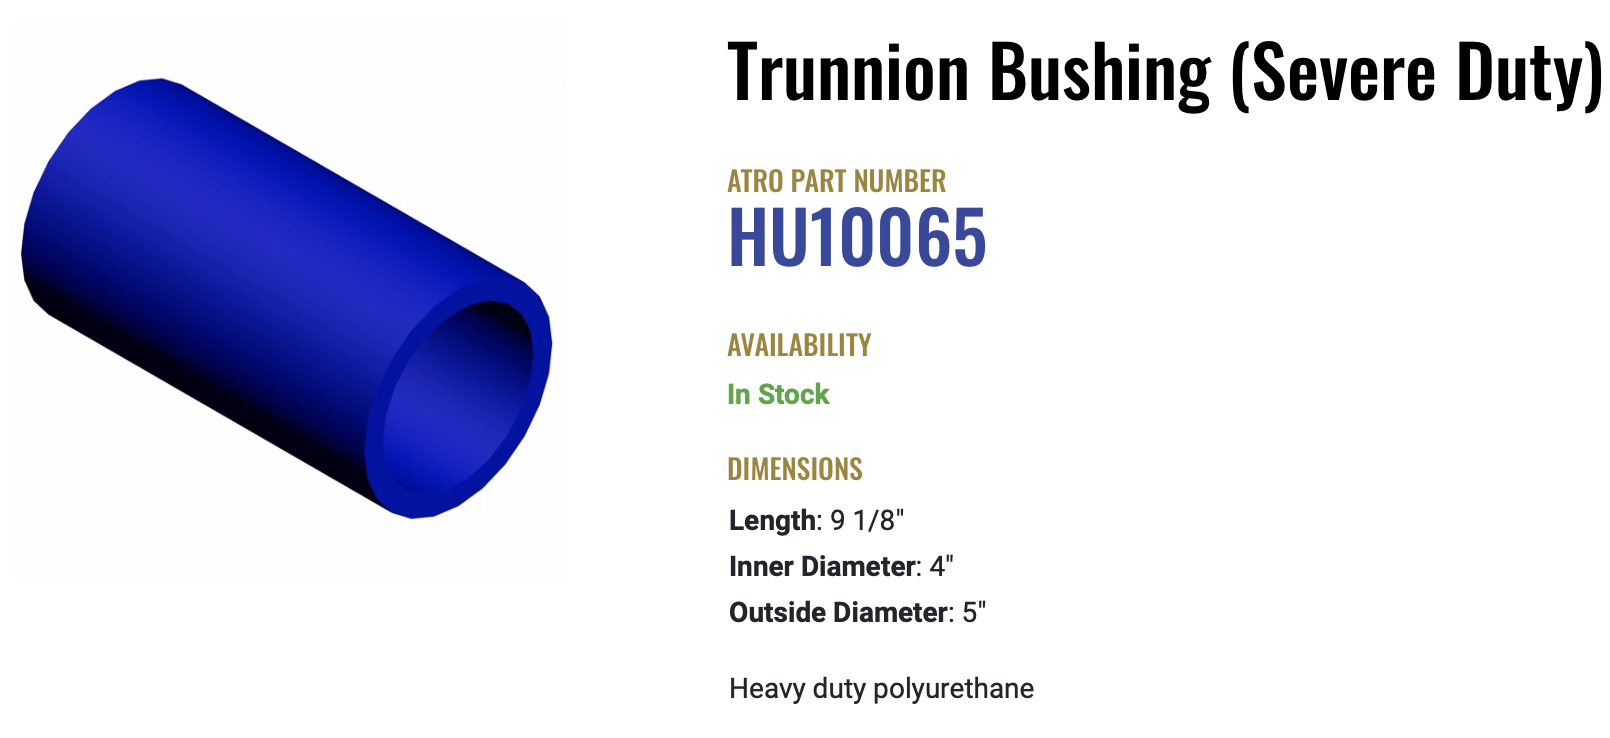 Atro Polyurethane Sever Duty Hutch Trunnion Bushing HU10065 